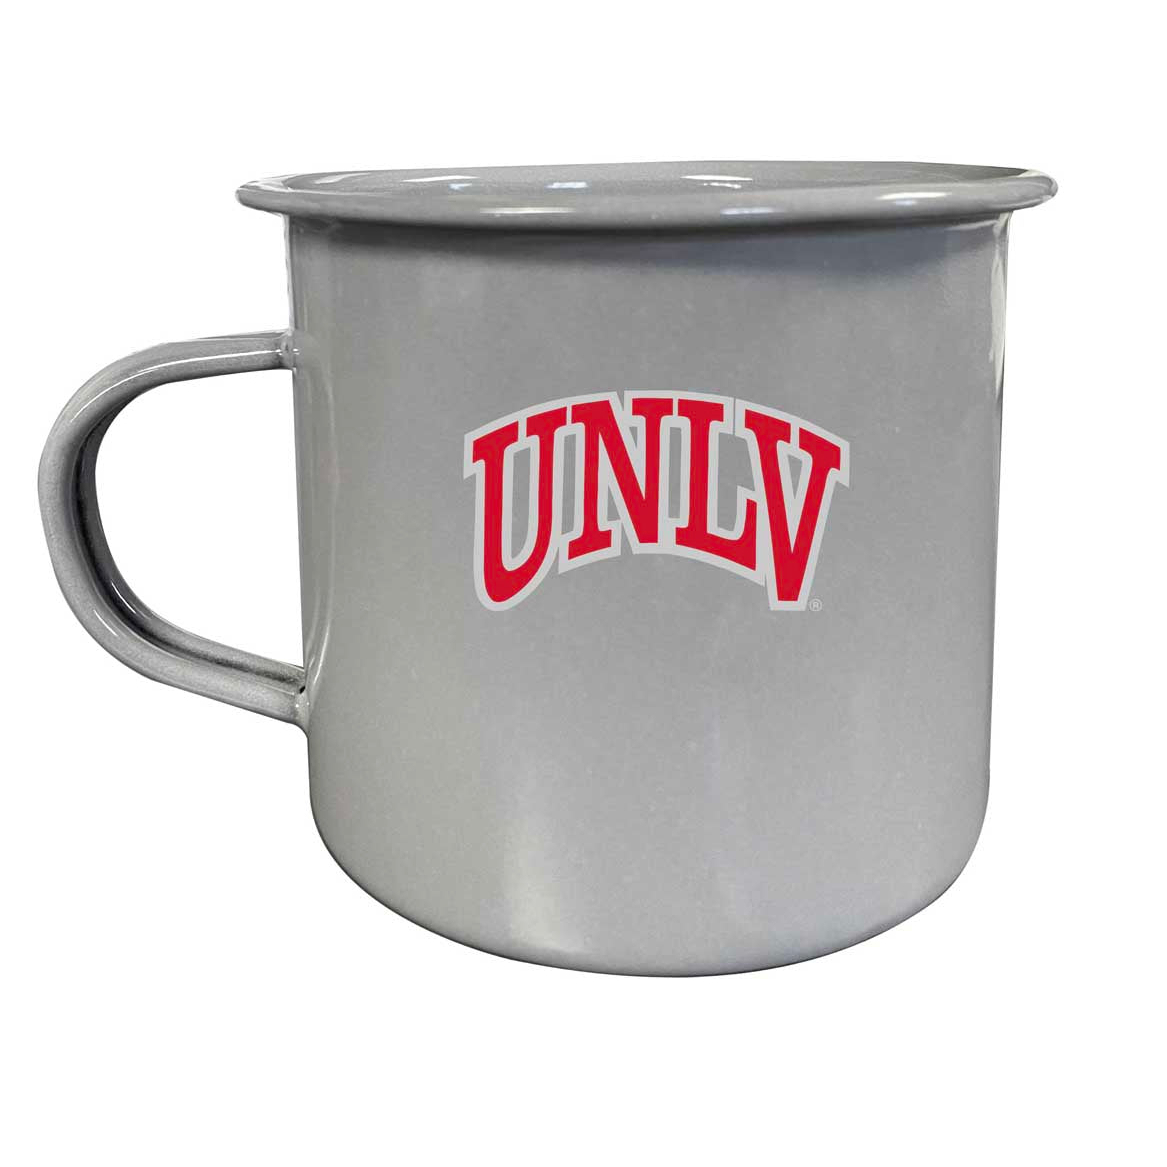 UNLV Rebels Tin Camper Coffee Mug - Choose Your Color - Gray